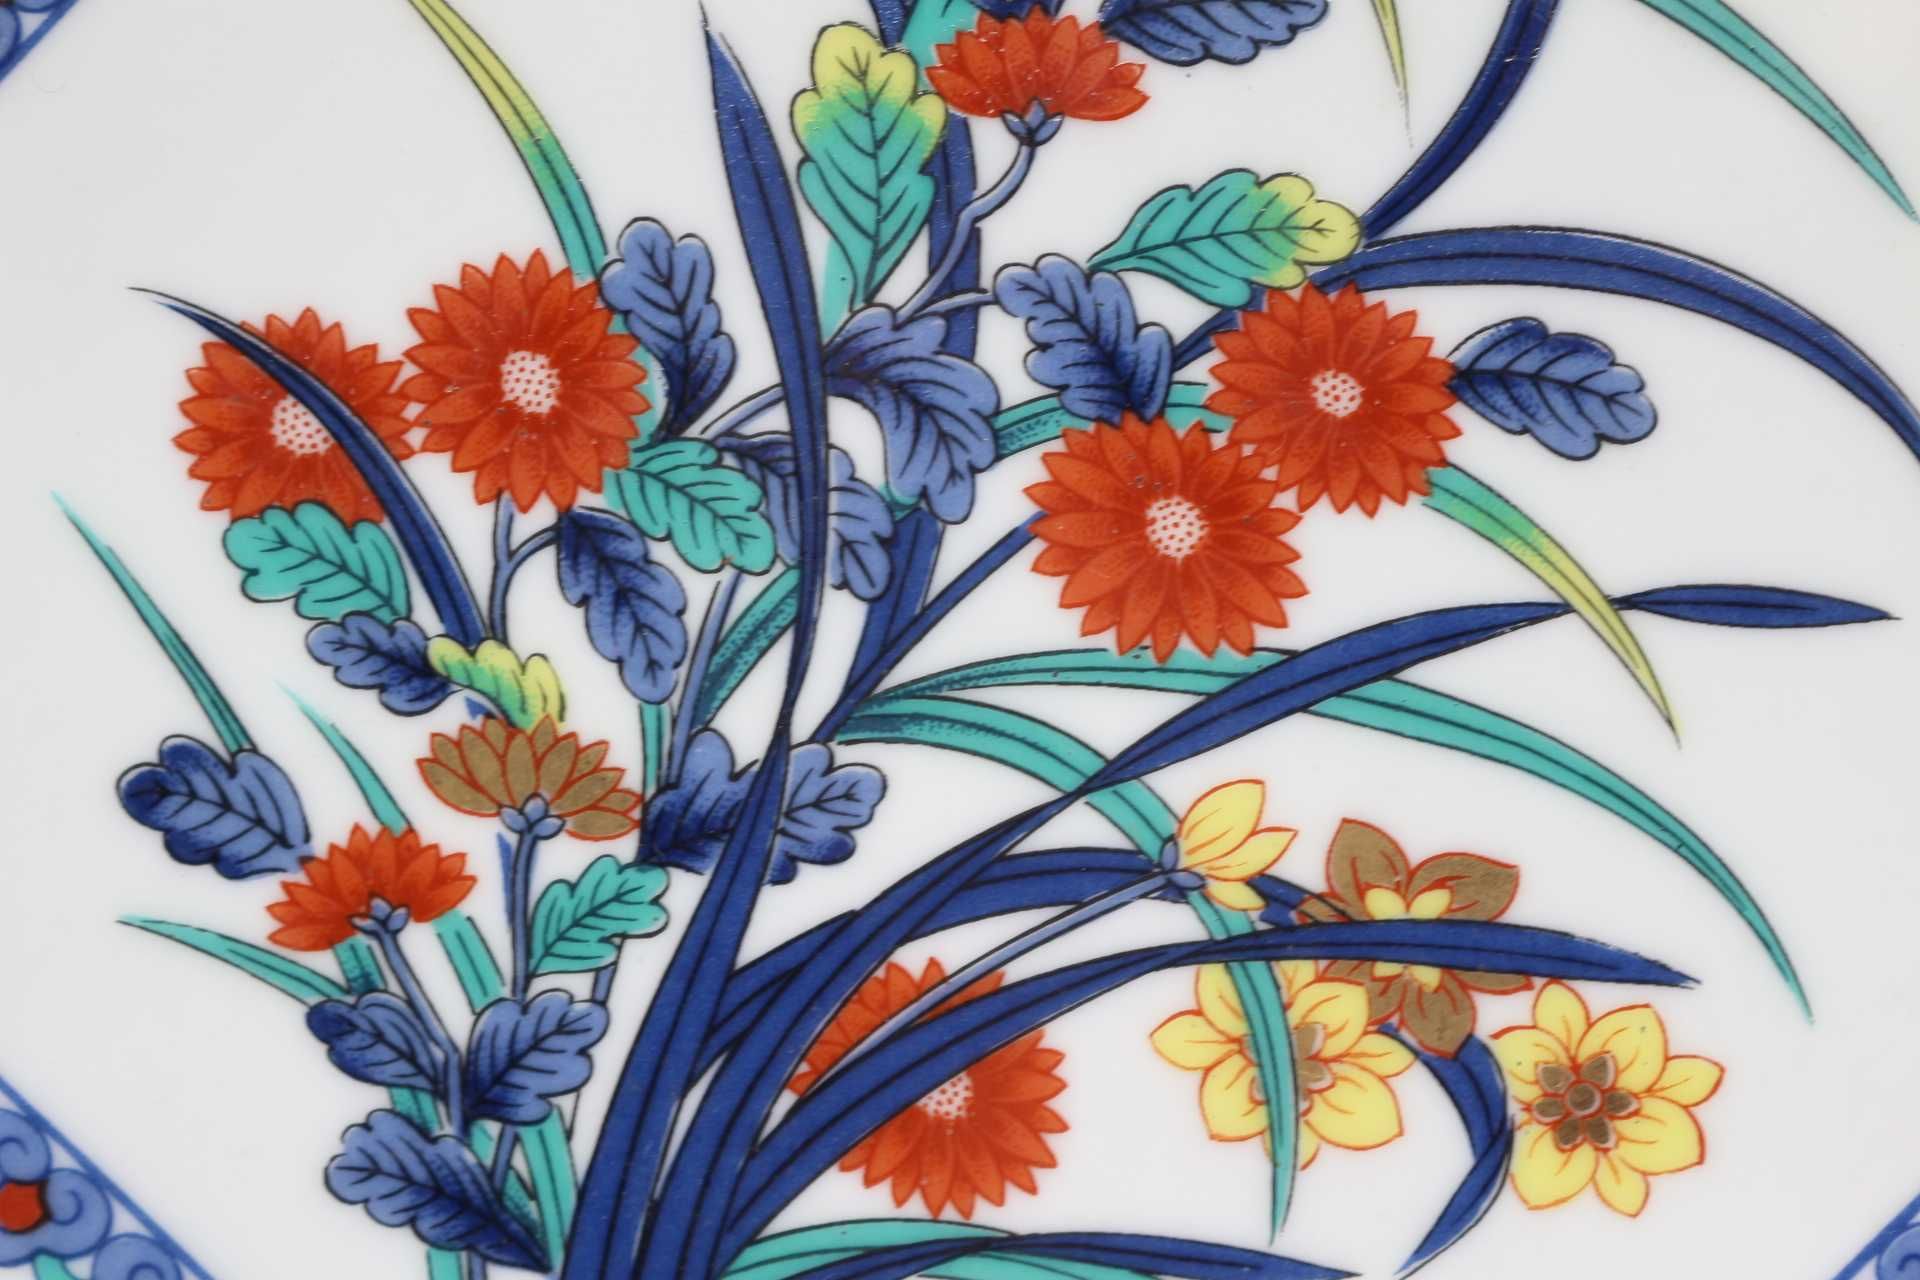 Prato Octogonal Porcelana Oriental Floral e Aves Séc. XX Marcado 29 cm